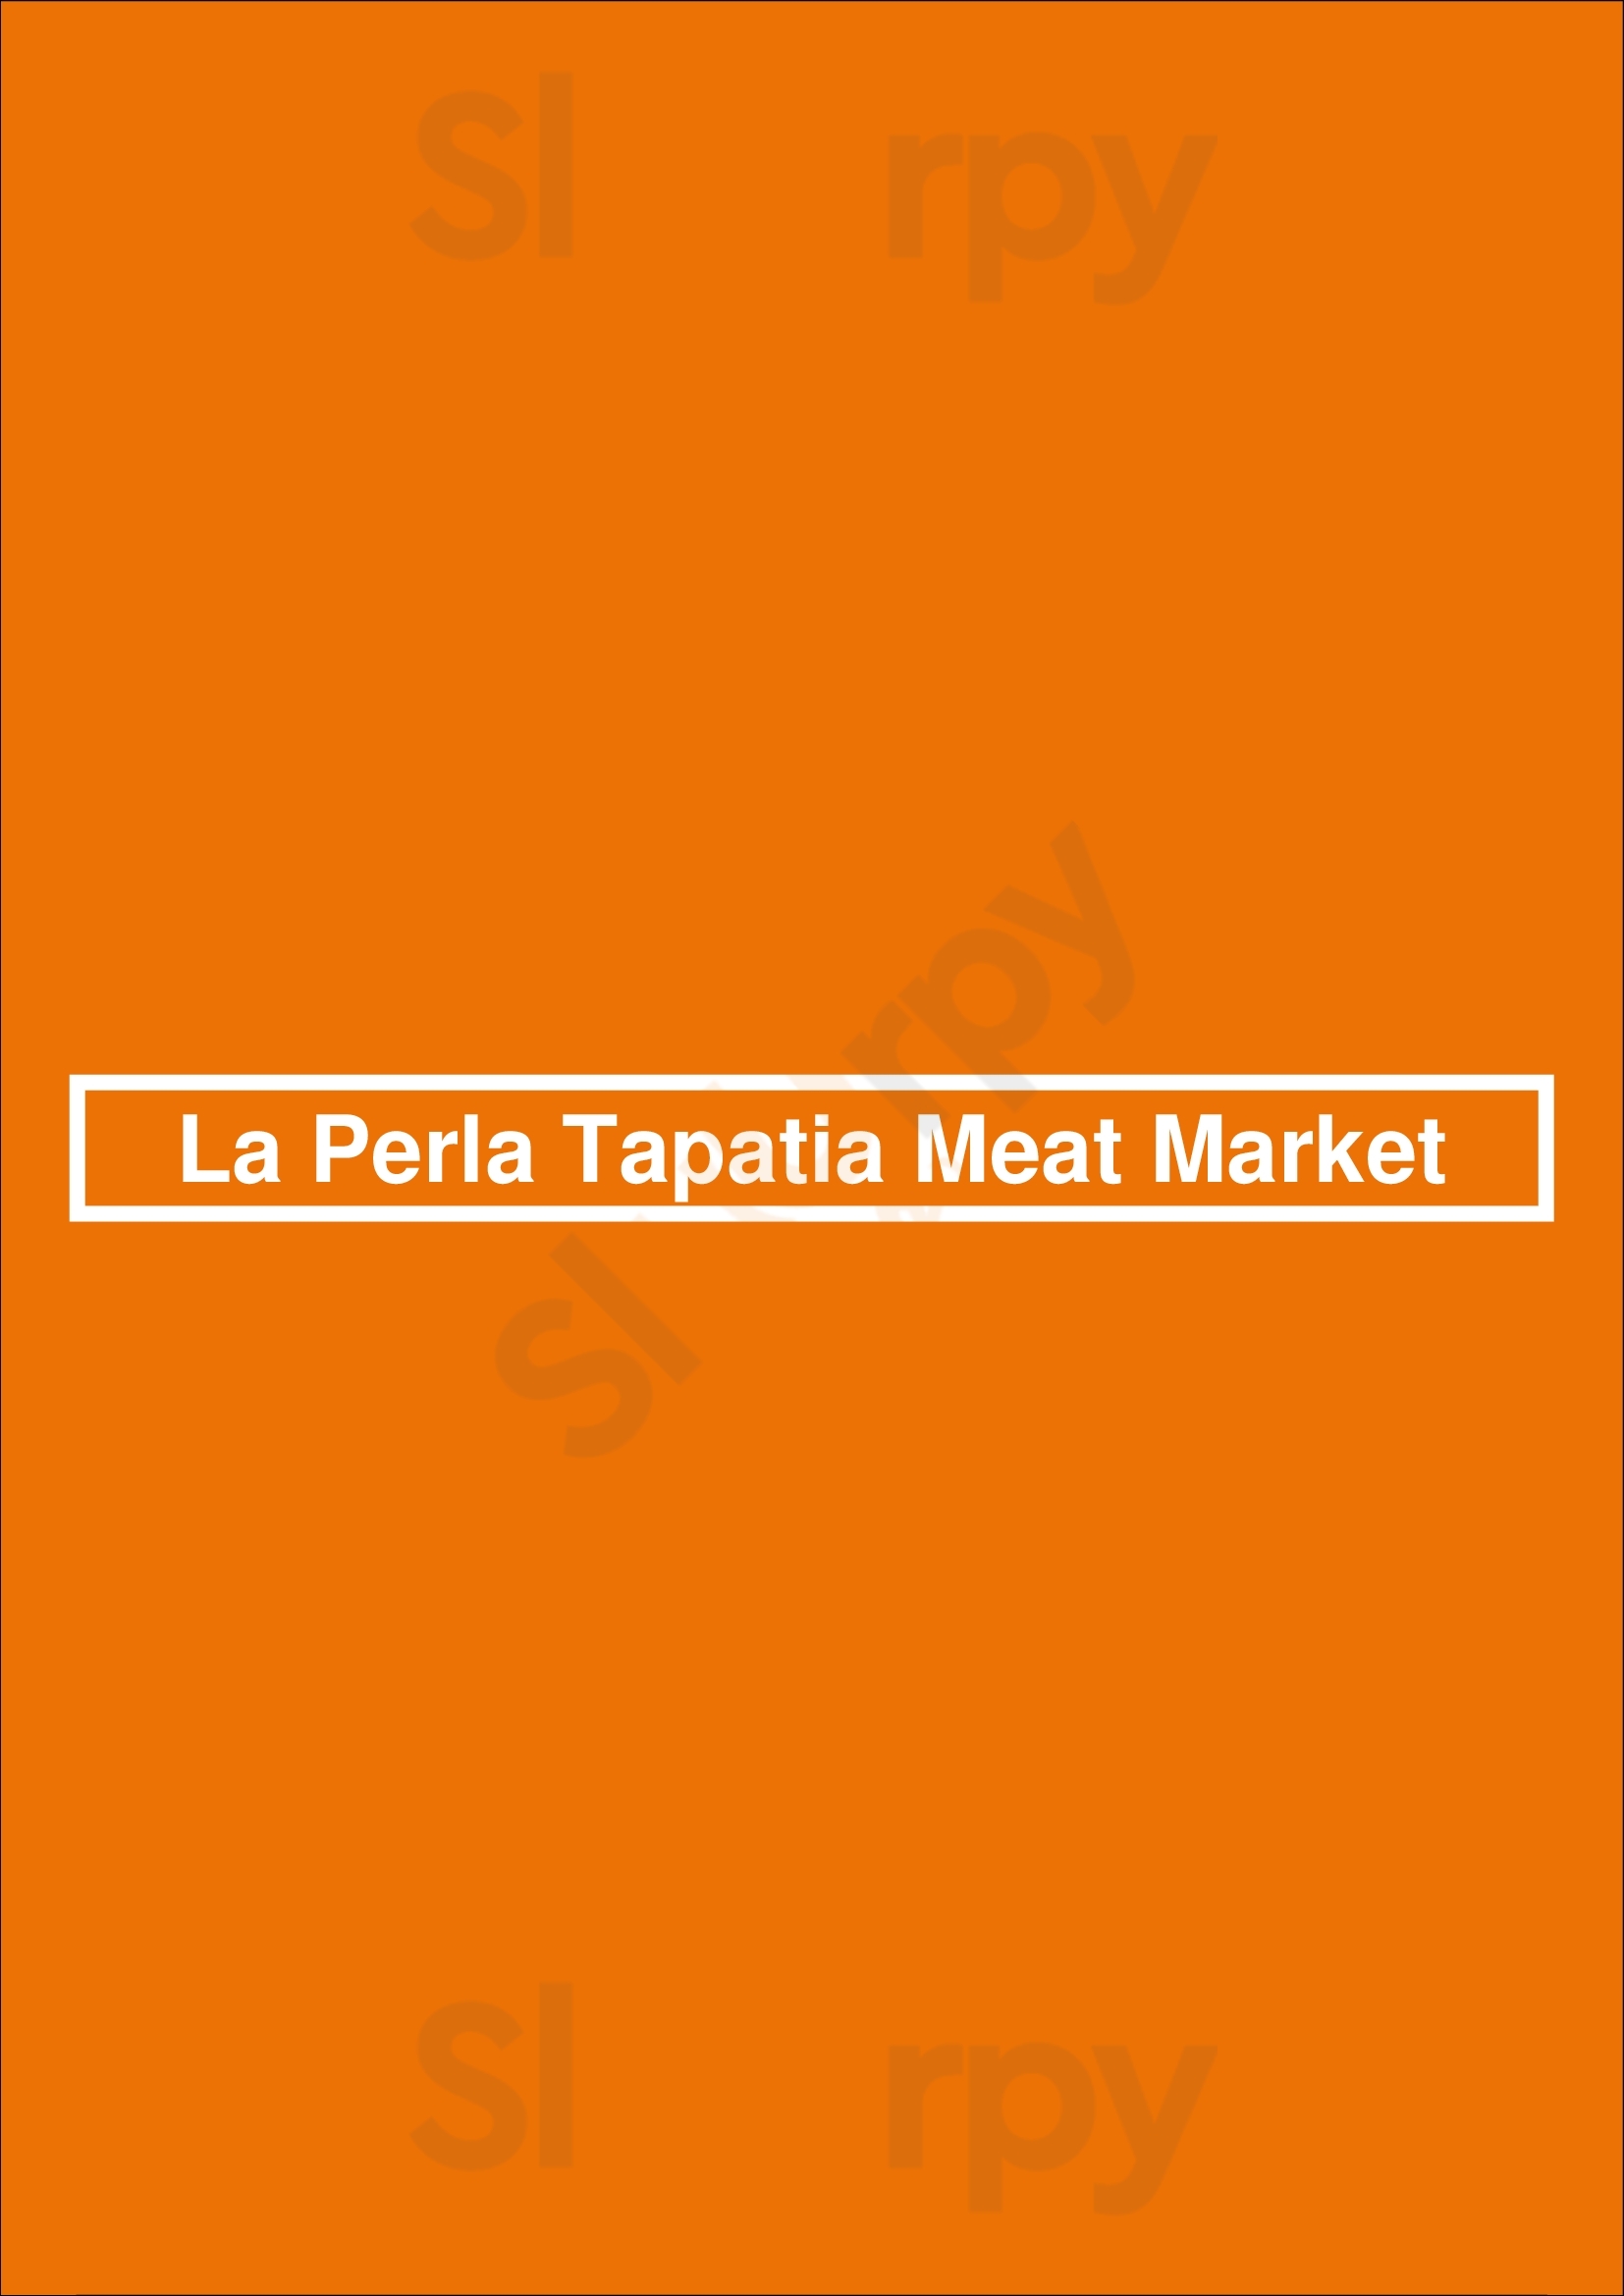 La Perla Tapatia Meat Market Los Angeles Menu - 1